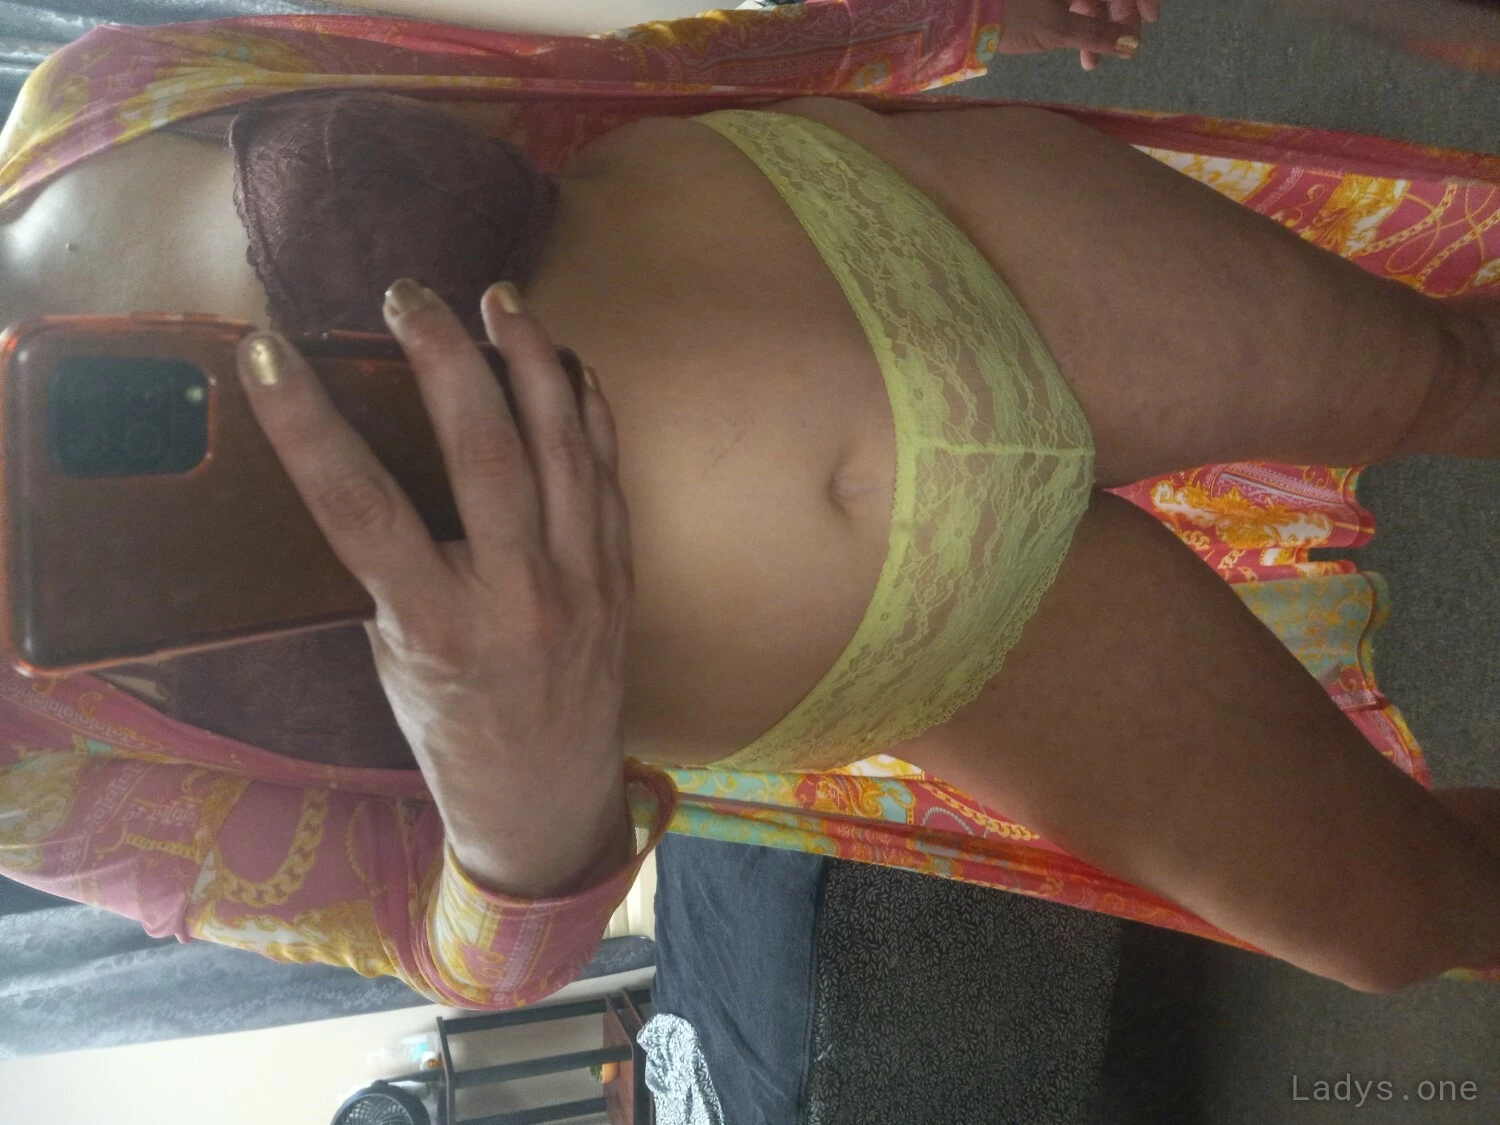 Erotic massage by Tahnee 40D-34-46, 40 years beautiful nude New York escorts girl, height 173 sm, Weight 80 kg